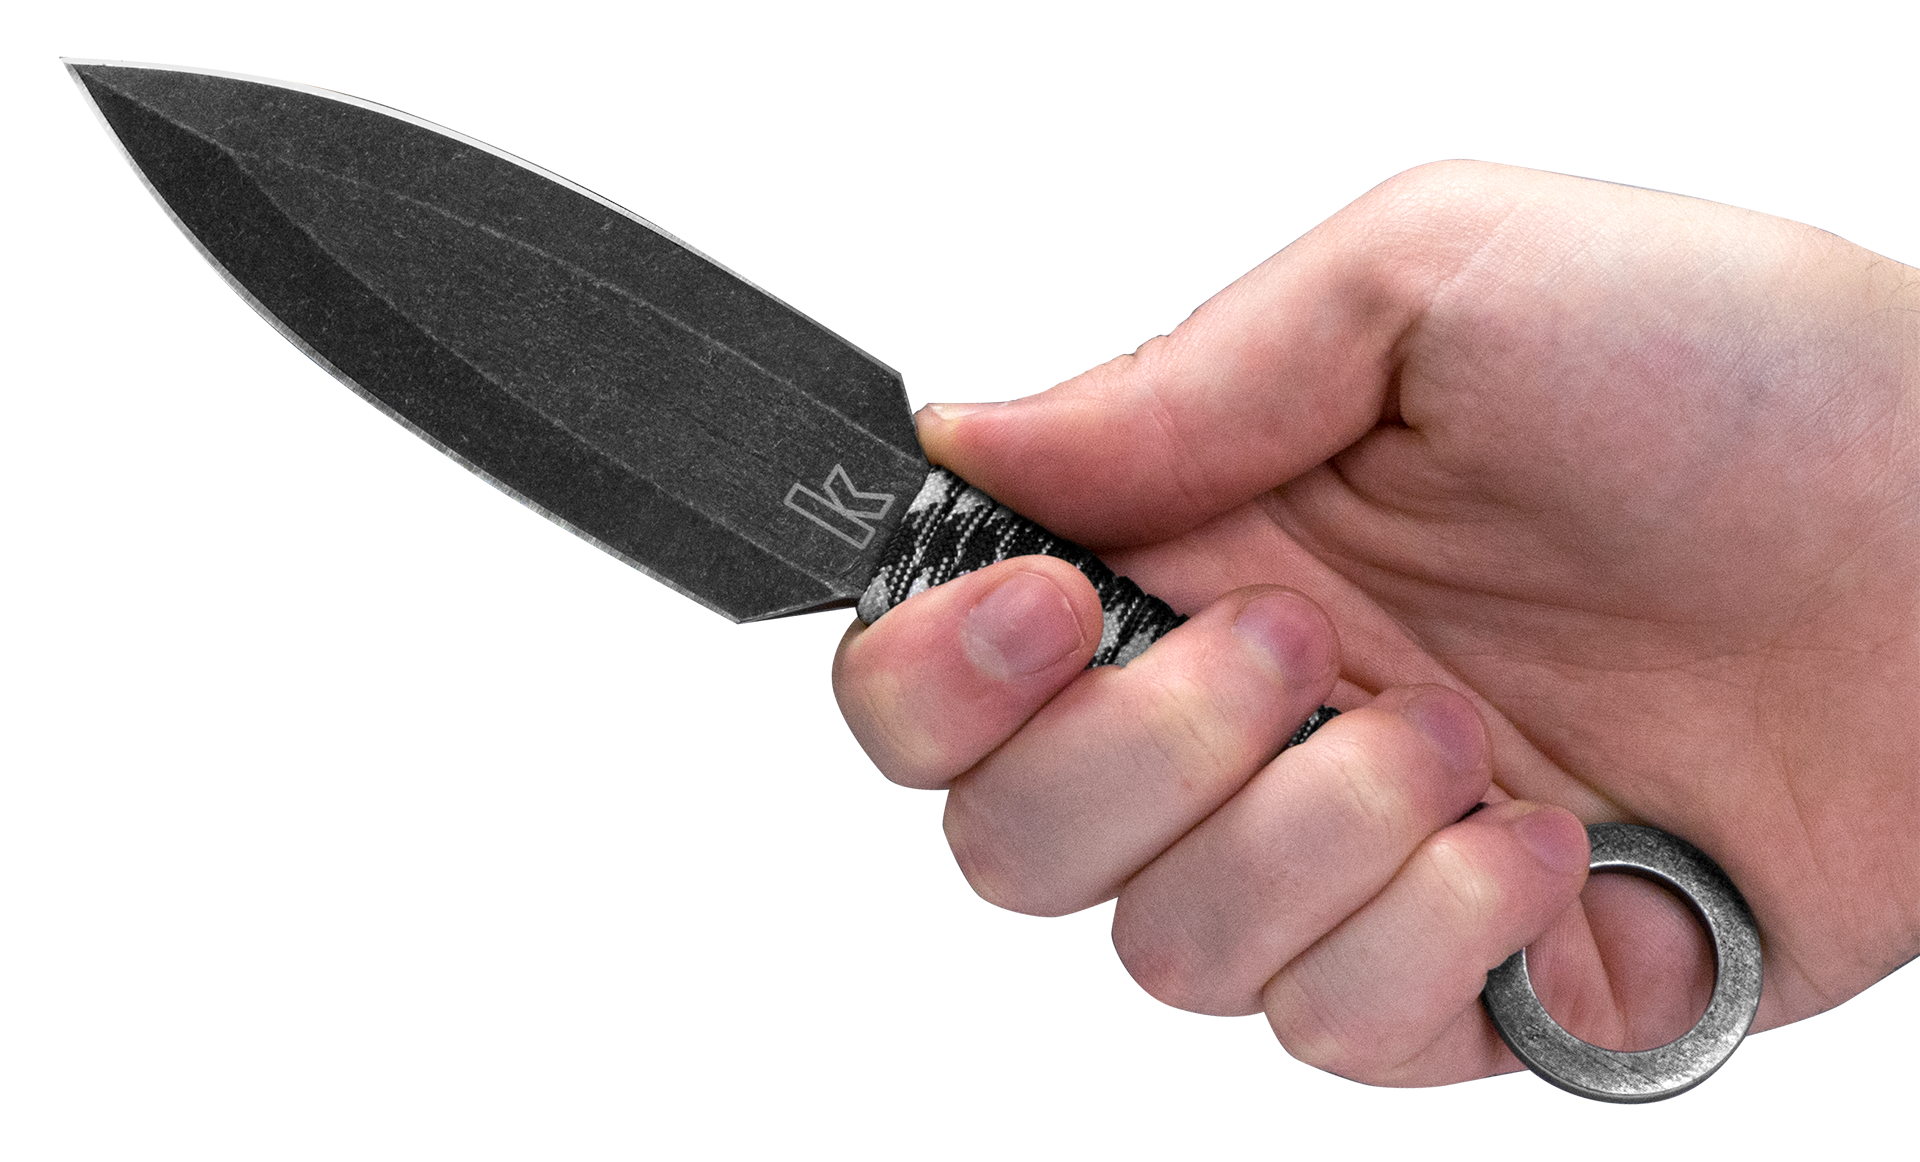 Kershaw 1747BWX Ion Throwing Knives 3 pc Set - 4.5 BlackWash Finish Double  Edge Blade